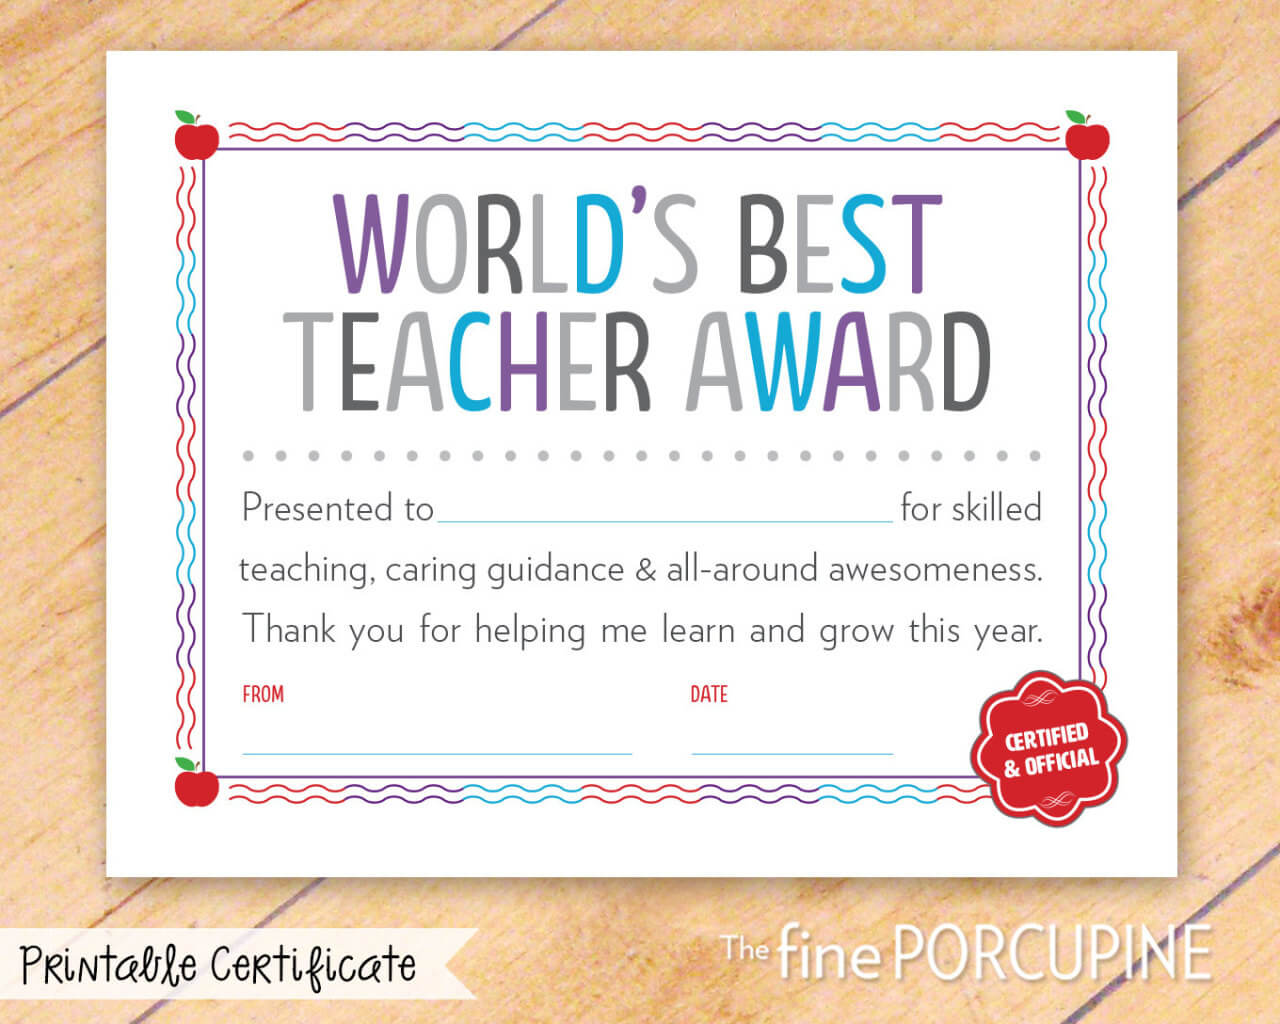 The Fine Porcupine — World's Best Teacher Award, Printable Intended For Best Teacher Certificate Templates Free